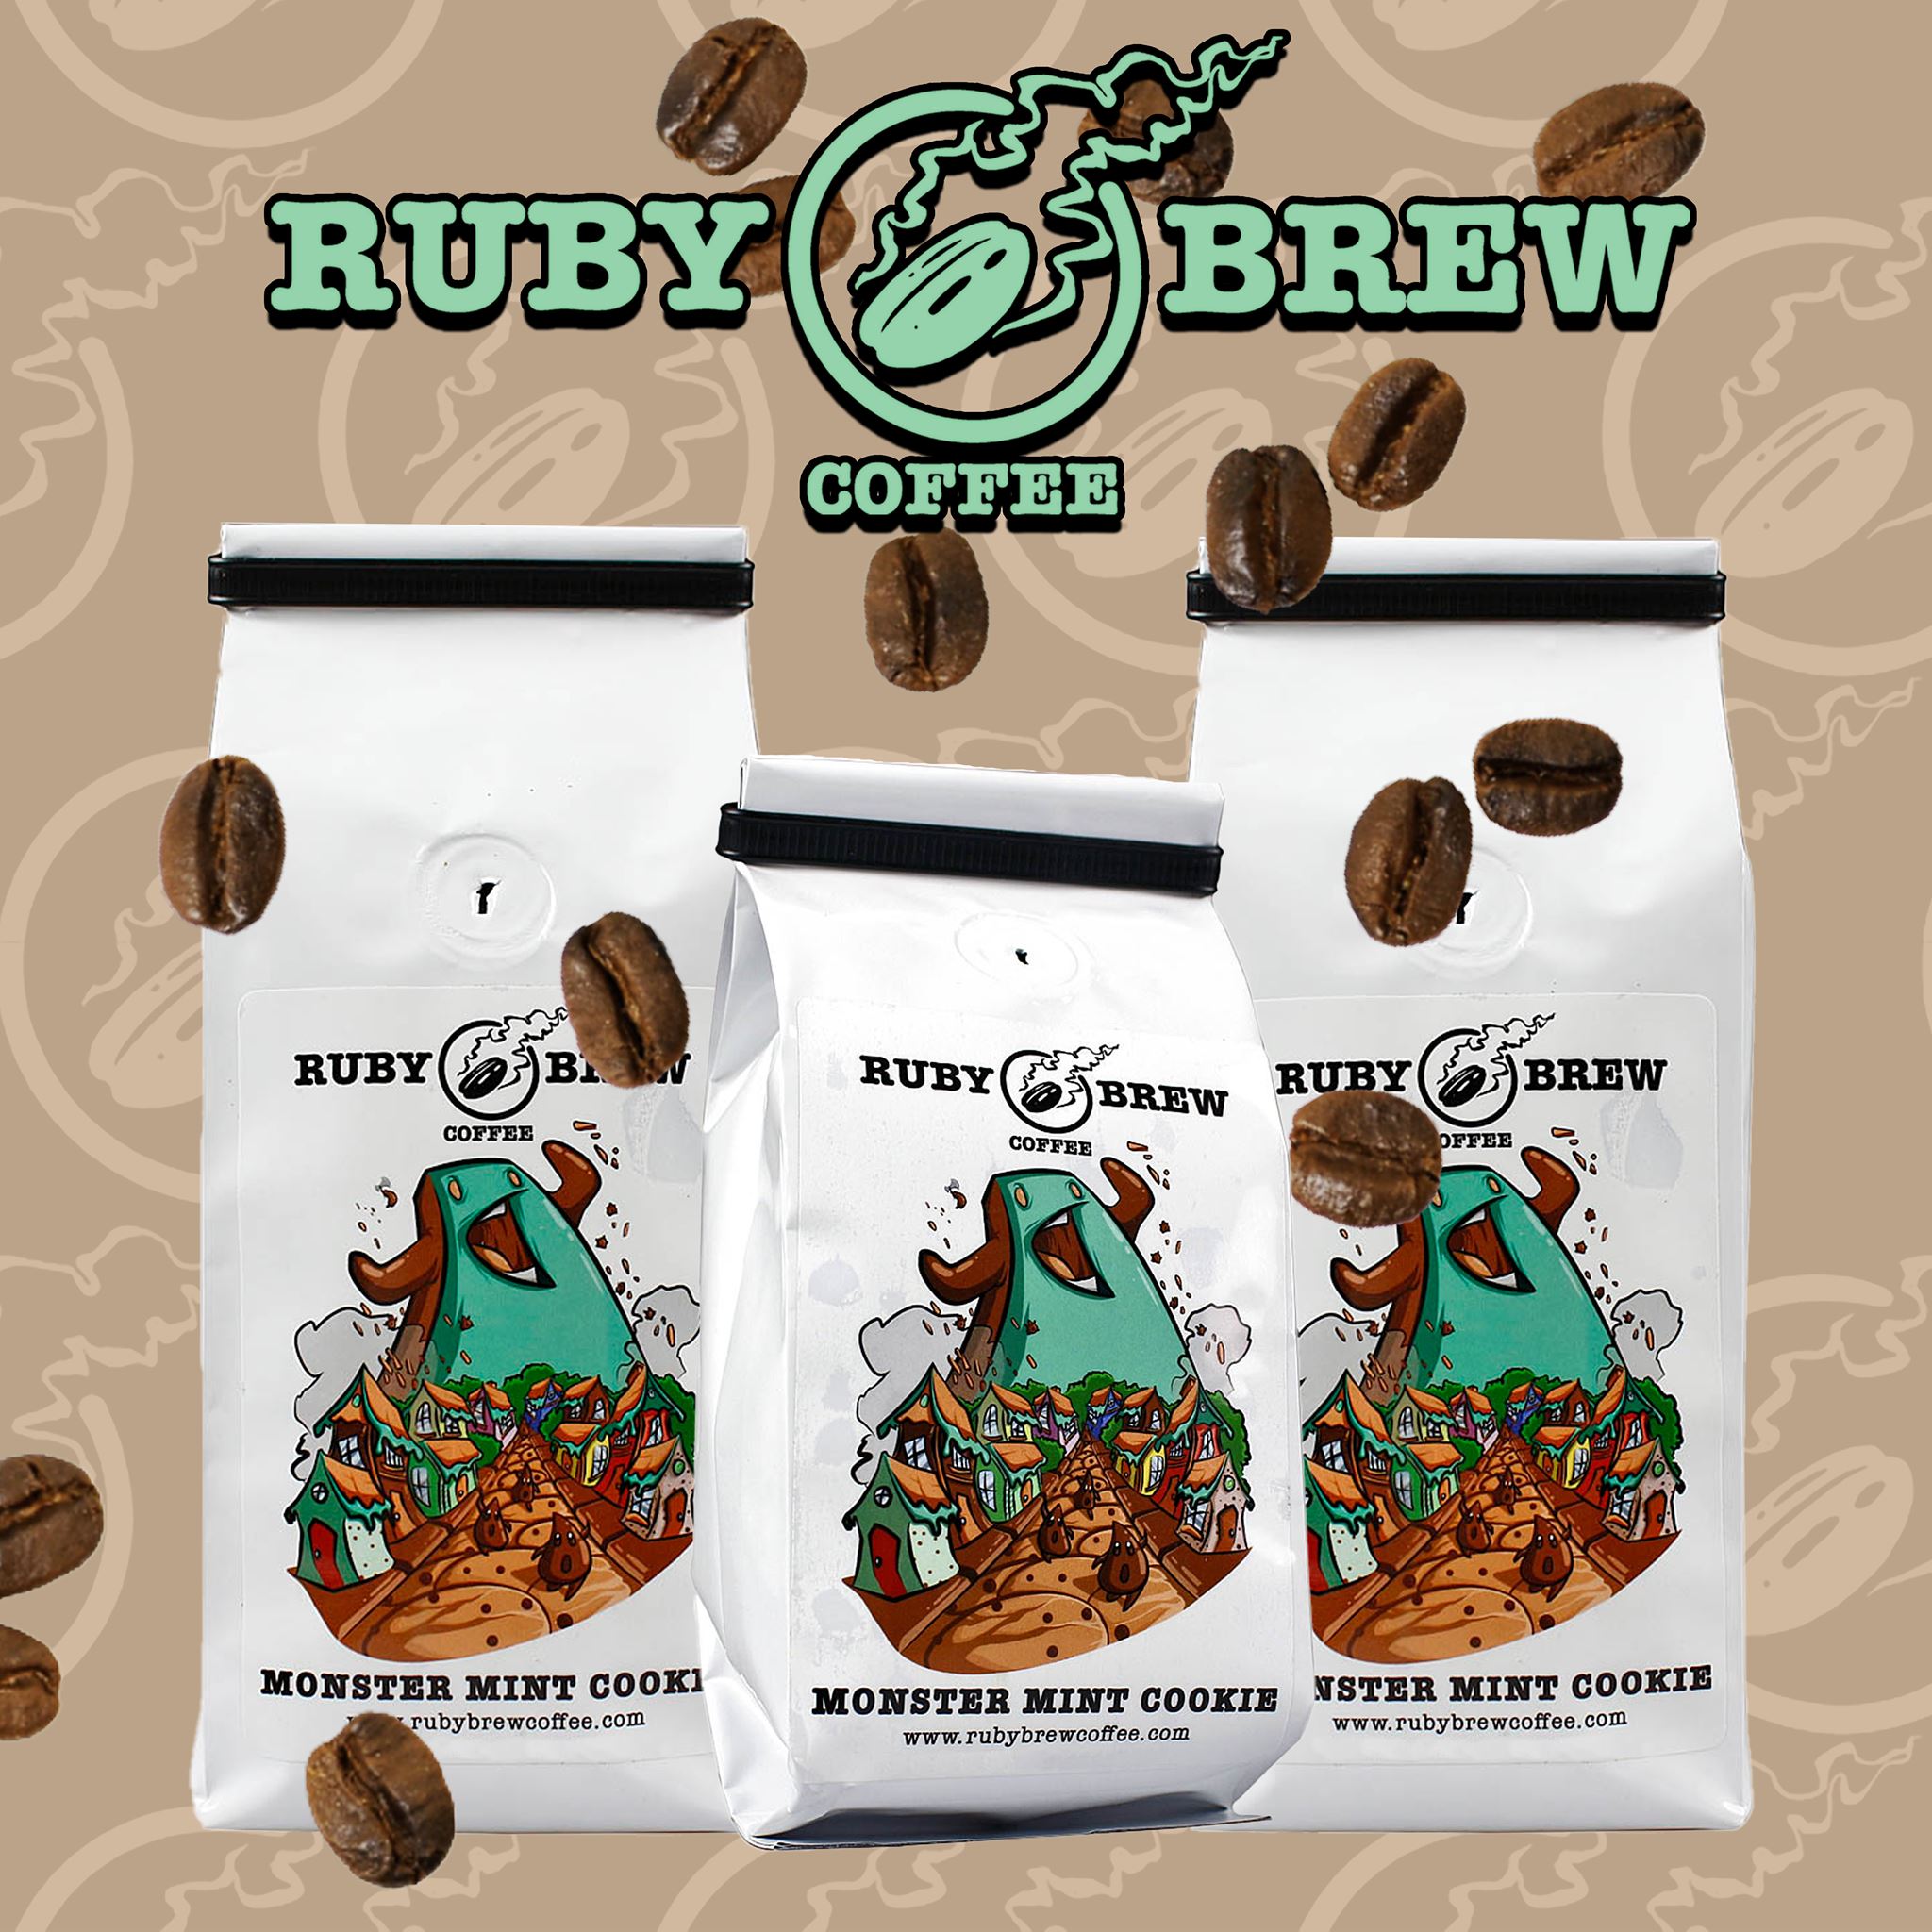 Monster Mint Cookie Coffee Blend 16 Oz Ground Medium Roast Ruby Brew